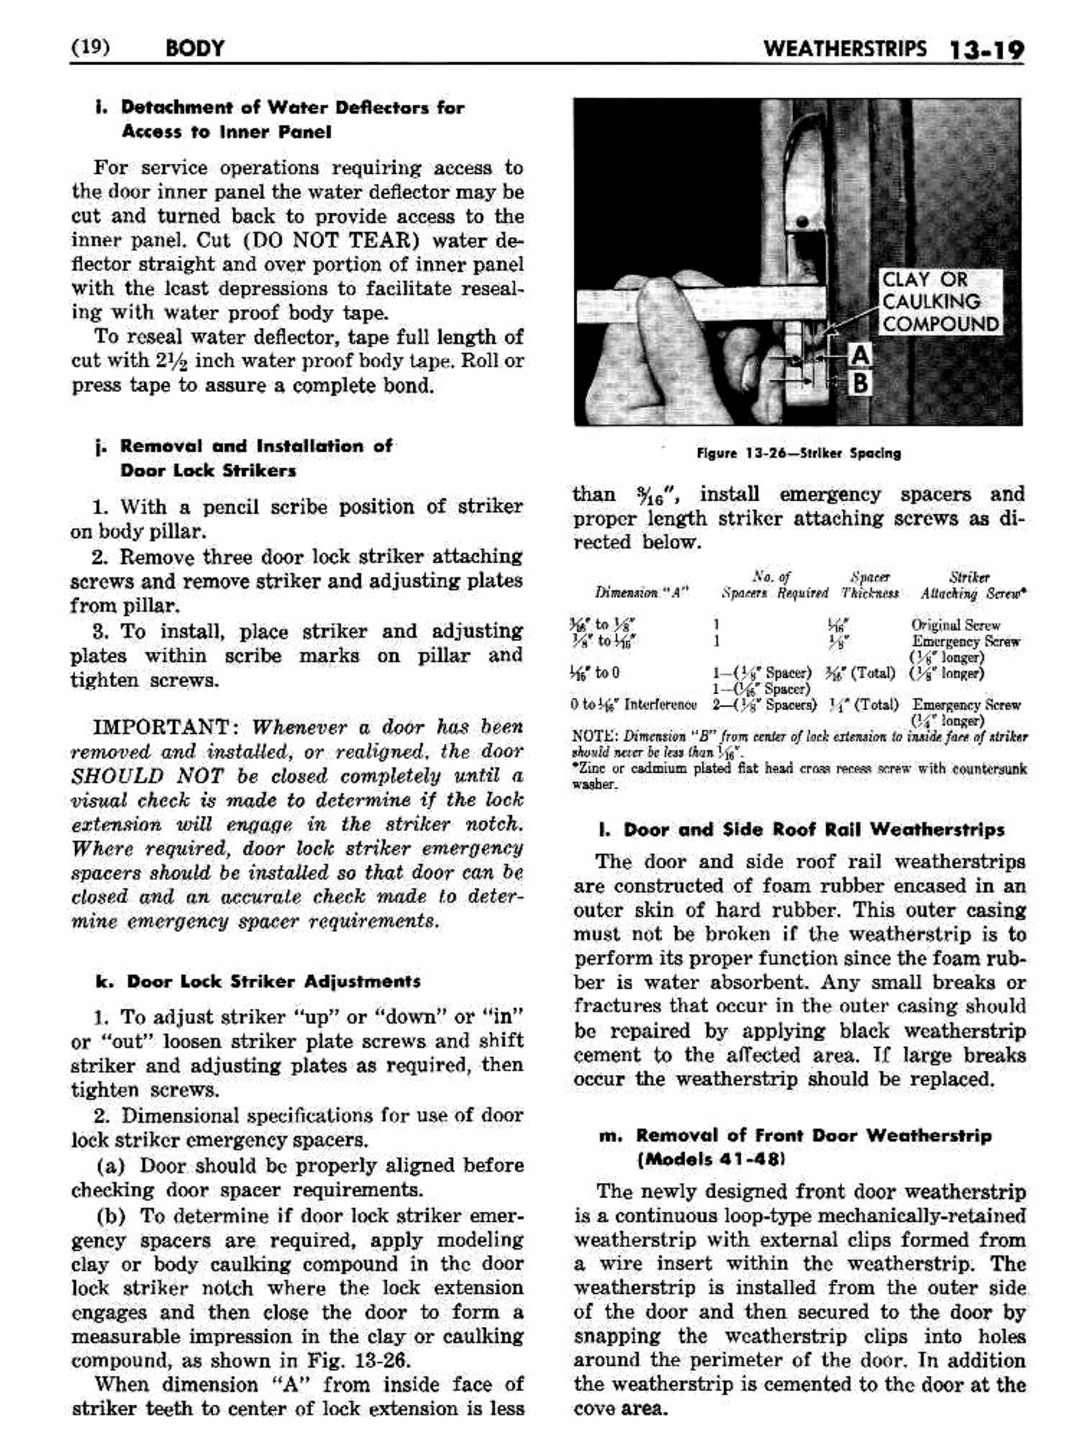 n_1958 Buick Body Service Manual-020-020.jpg